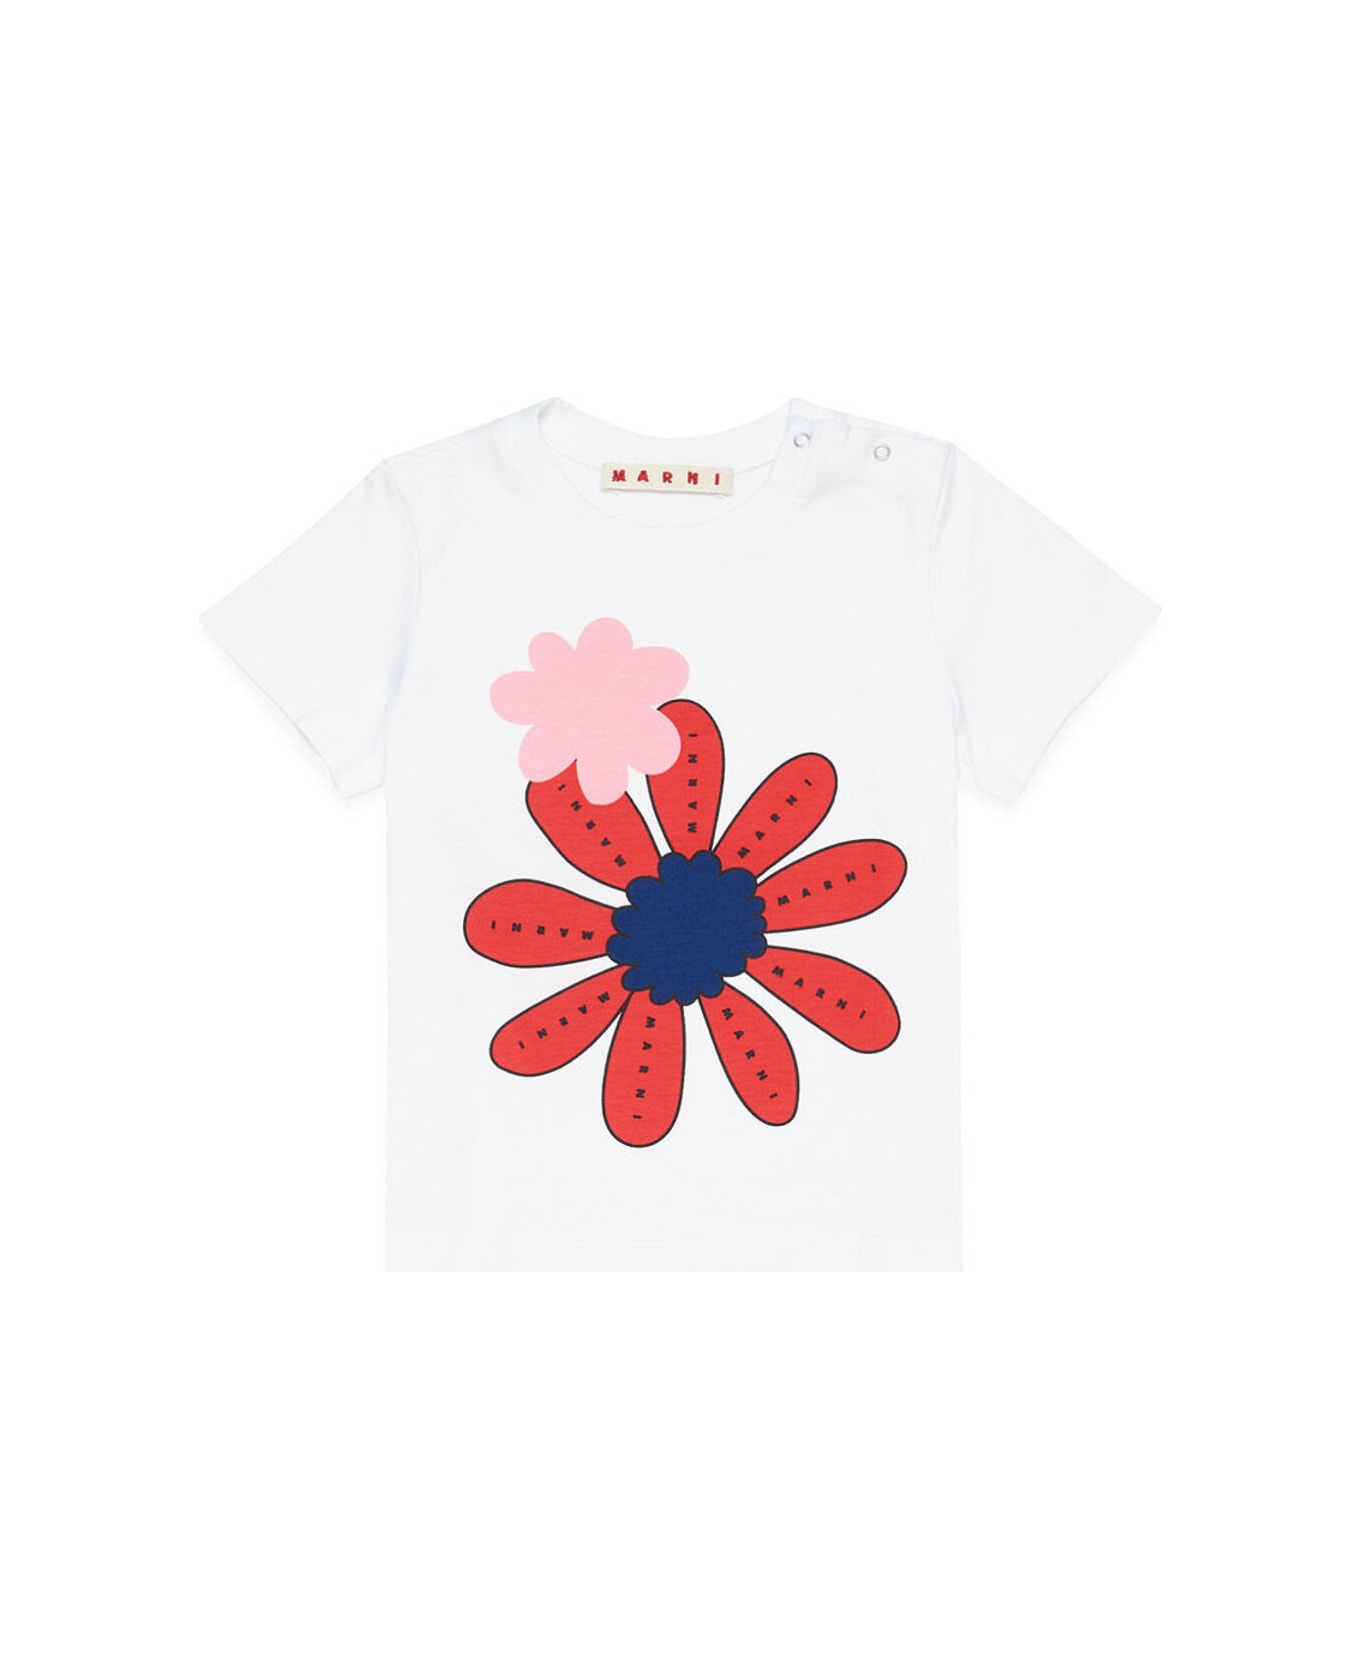 Marni Mt56b T-shirt Marni White Cotton T-shirt With Floral Print - White